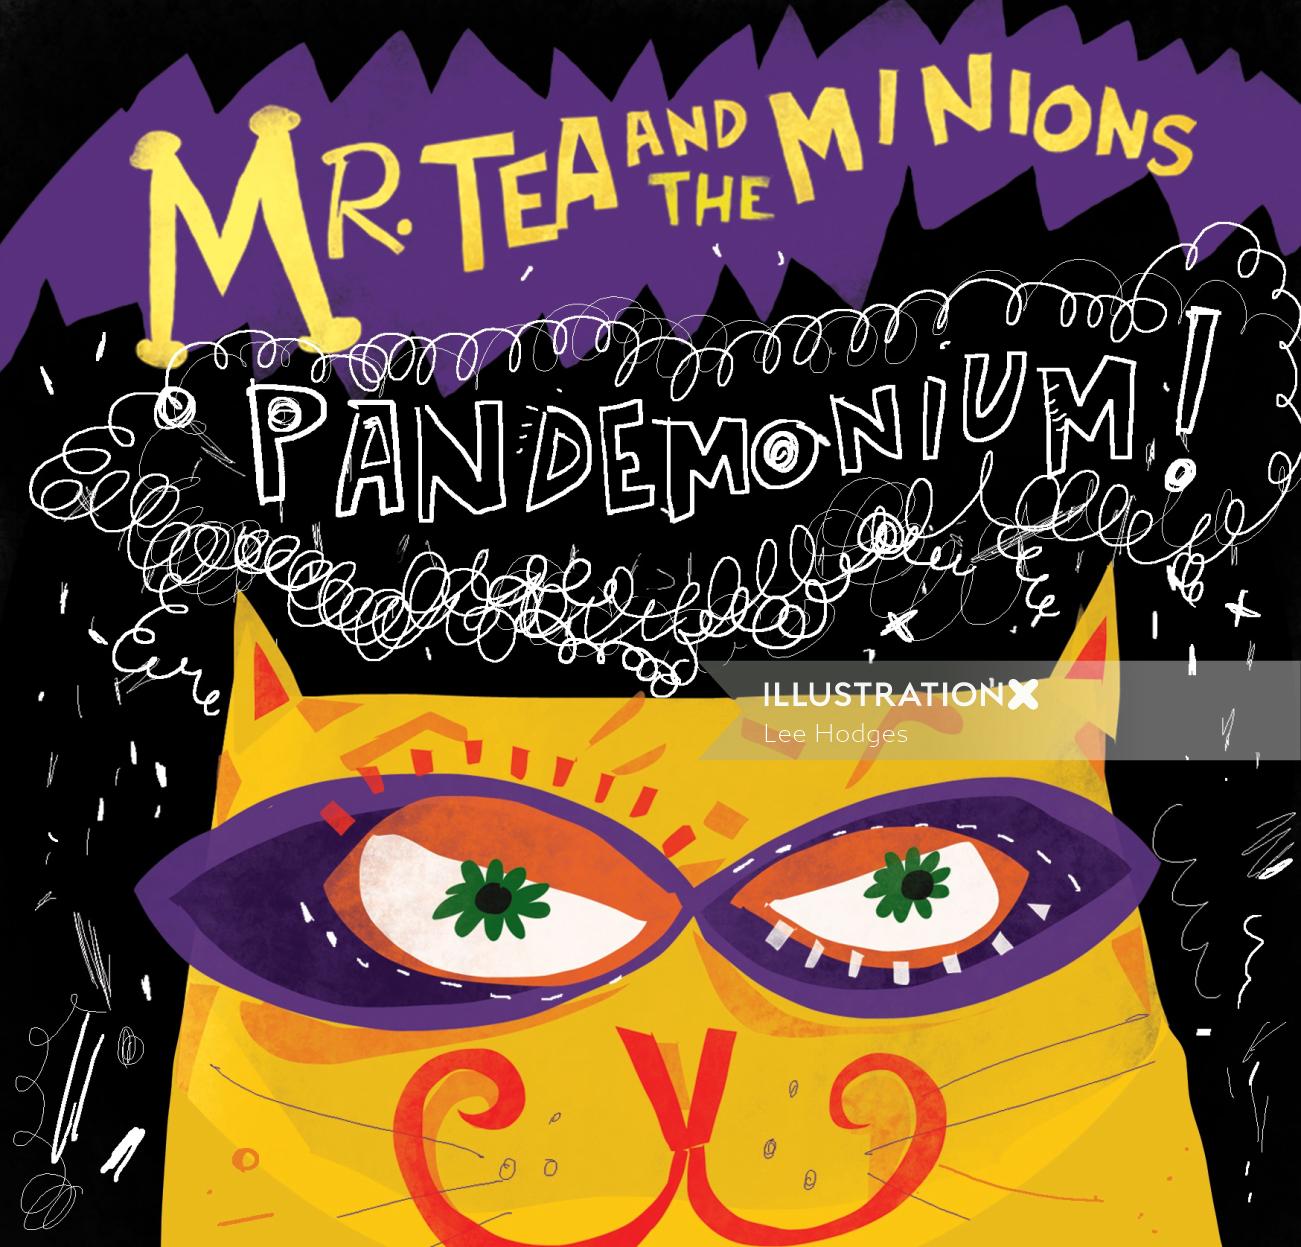 Arte da capa da música Mr. Tea and the Minions Pandemonium